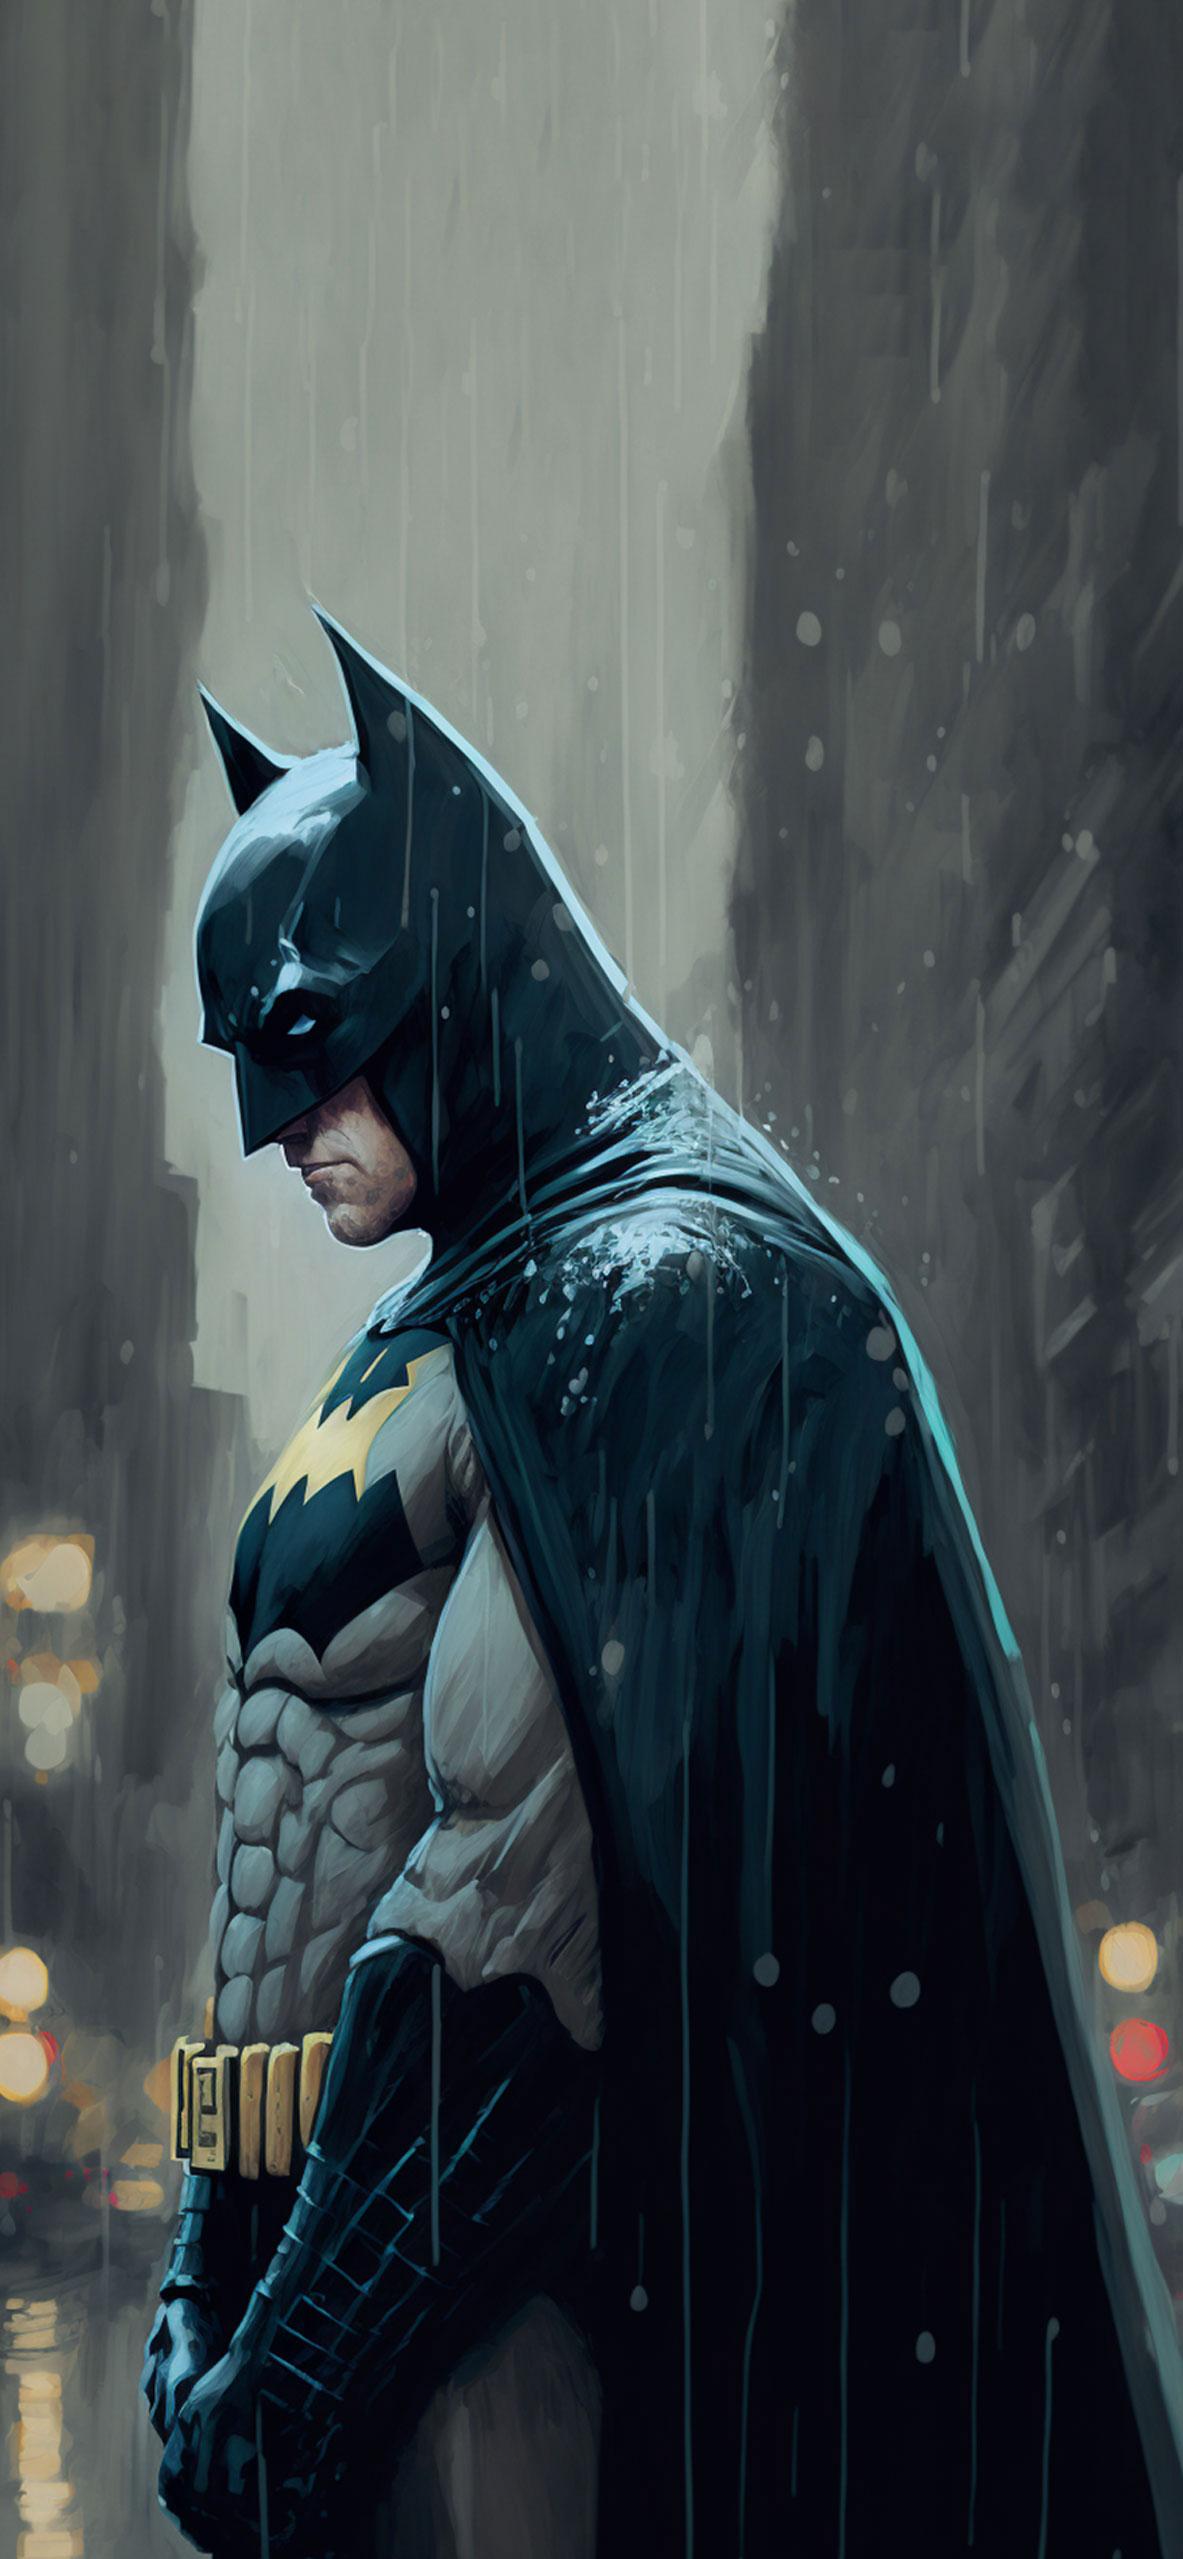 Batman In The Rain Wallpaper For iPhone